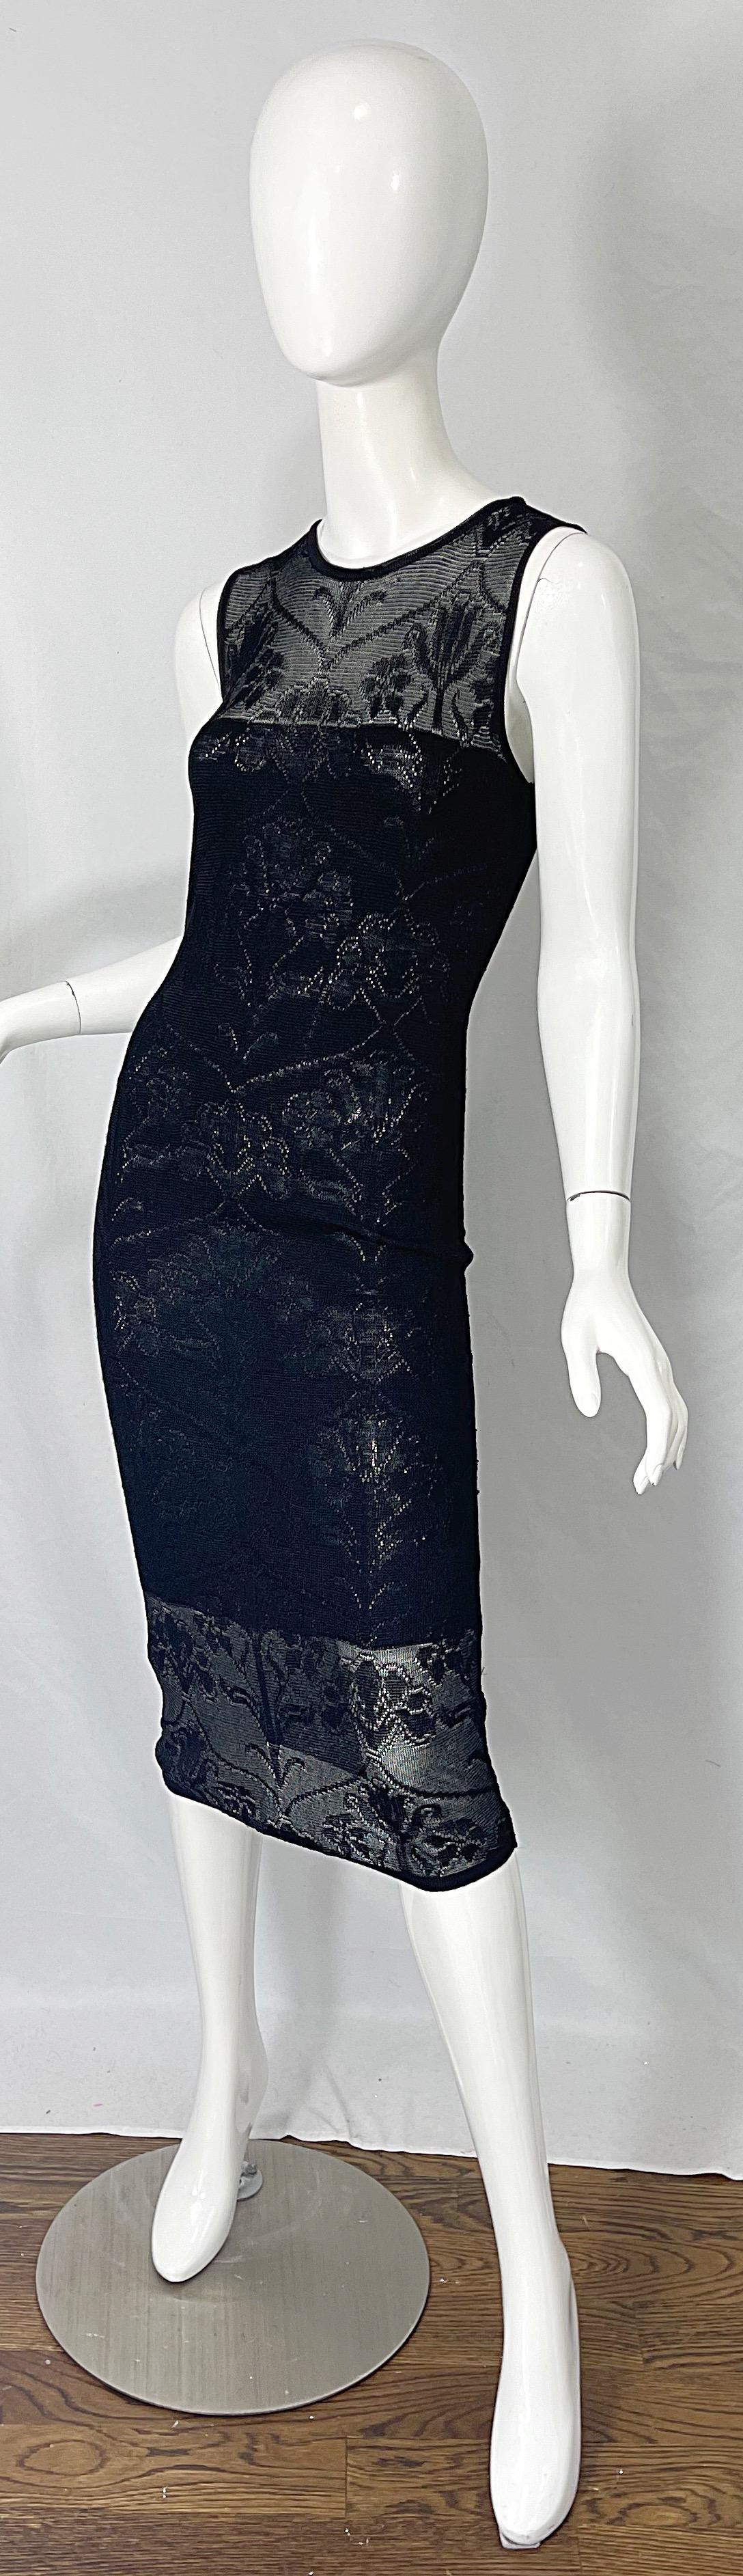 Krizia 1990s Black Crochet Embroidered Semi Sheer Sleeveless Vintage 90s Dress For Sale 4